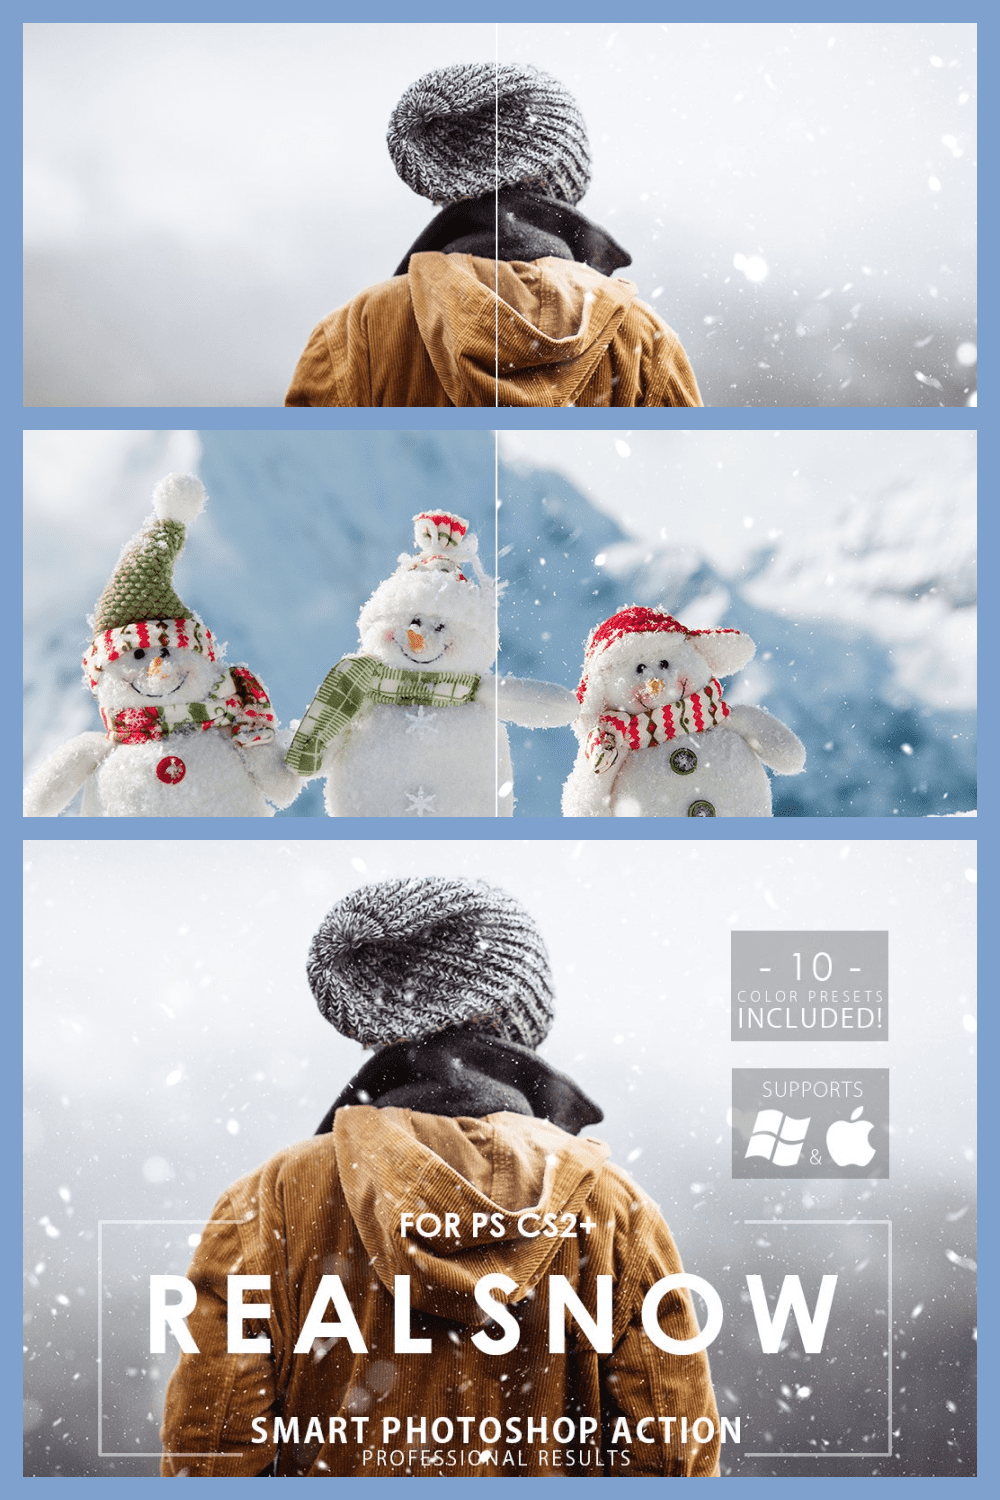 Real Snow Photoshop Action - MasterBundles - Pinterest Collage Image.